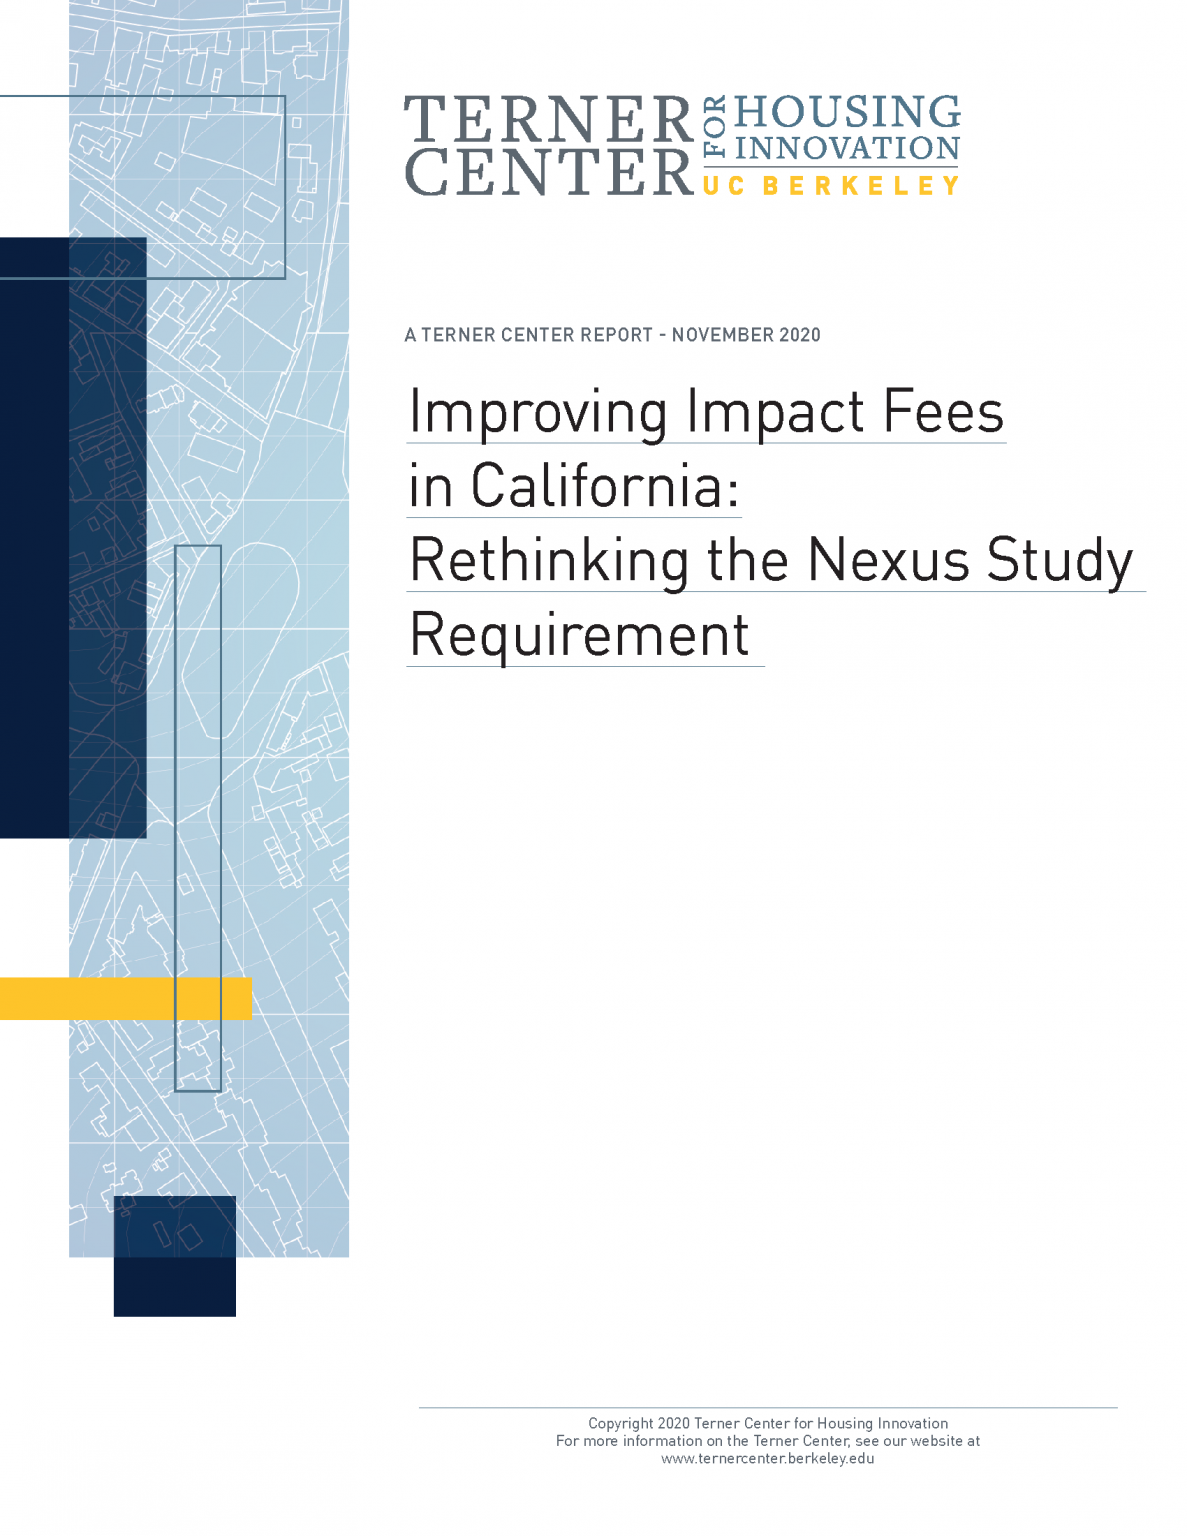 Improving Impact Fees in California Rethinking the Nexus Studies